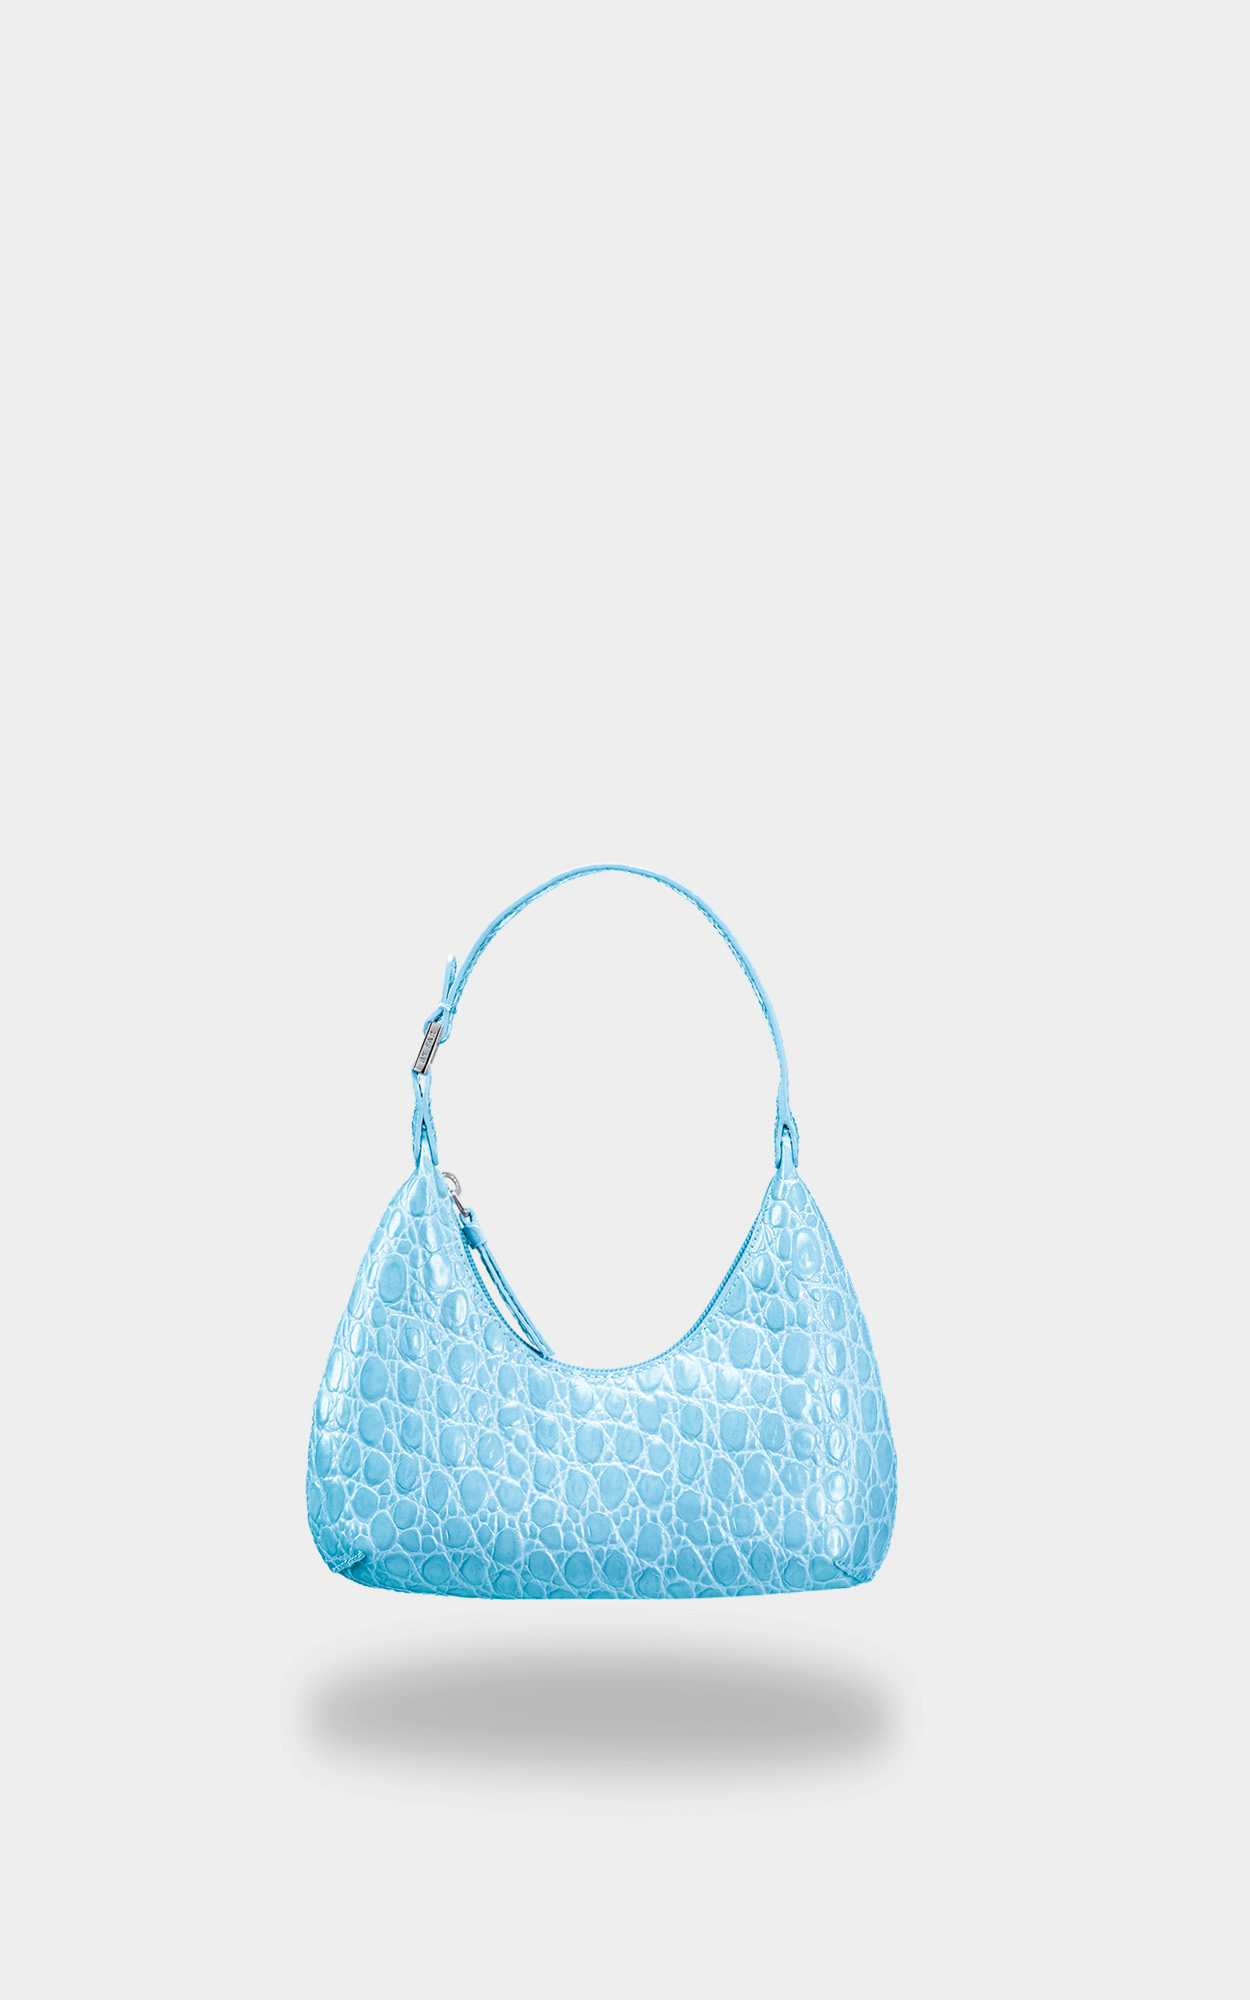 By FAR - Mini Amber Tote Bag in Blau